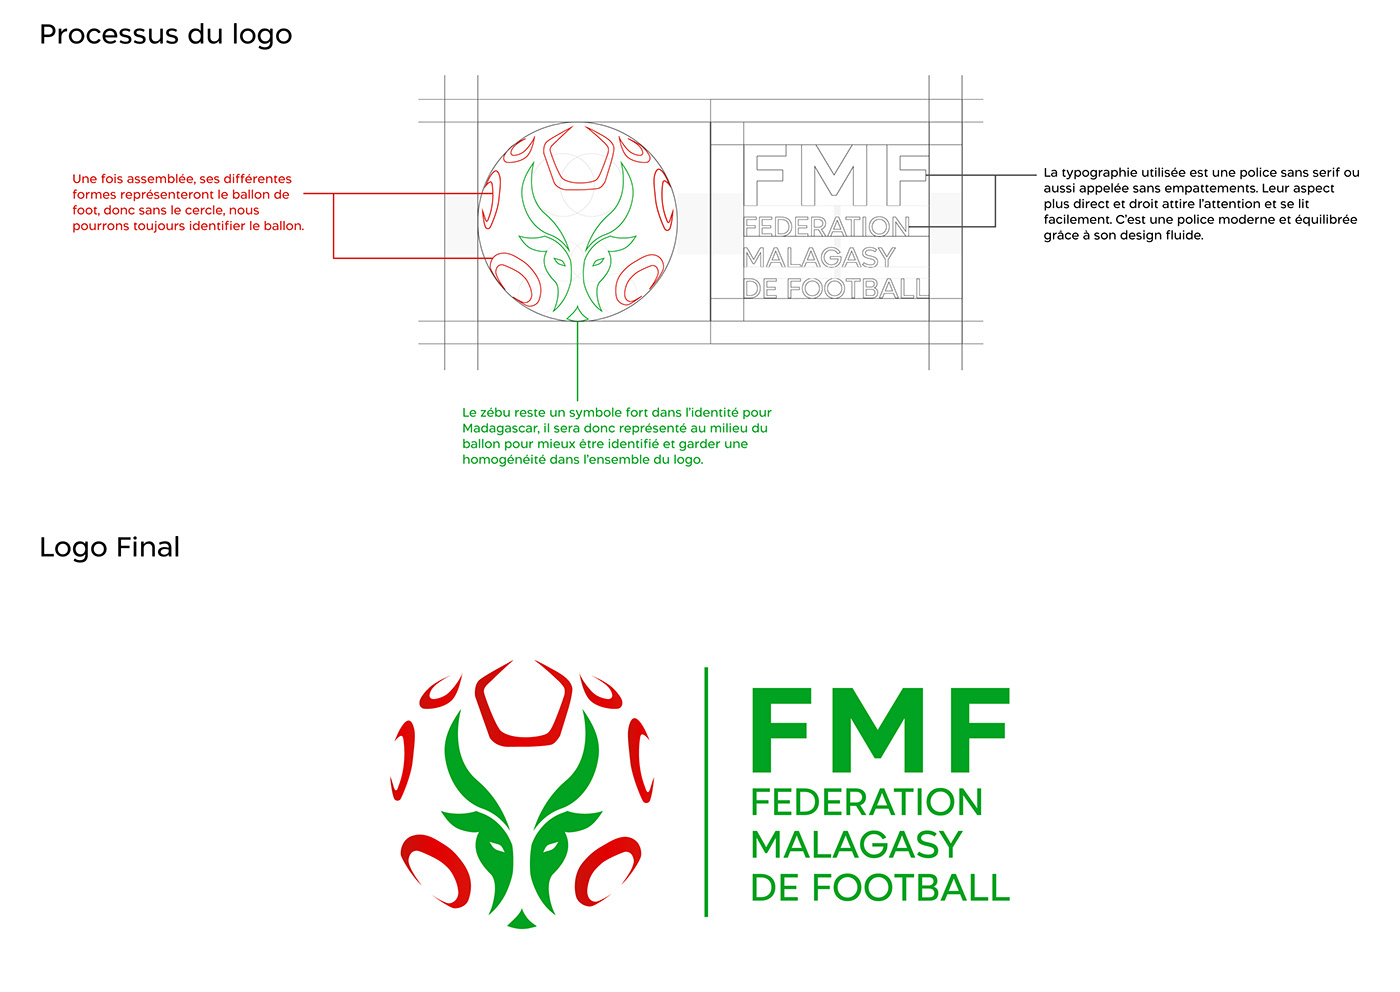 barea brand federation foot jersey logo madagascar portfolio sport zebu